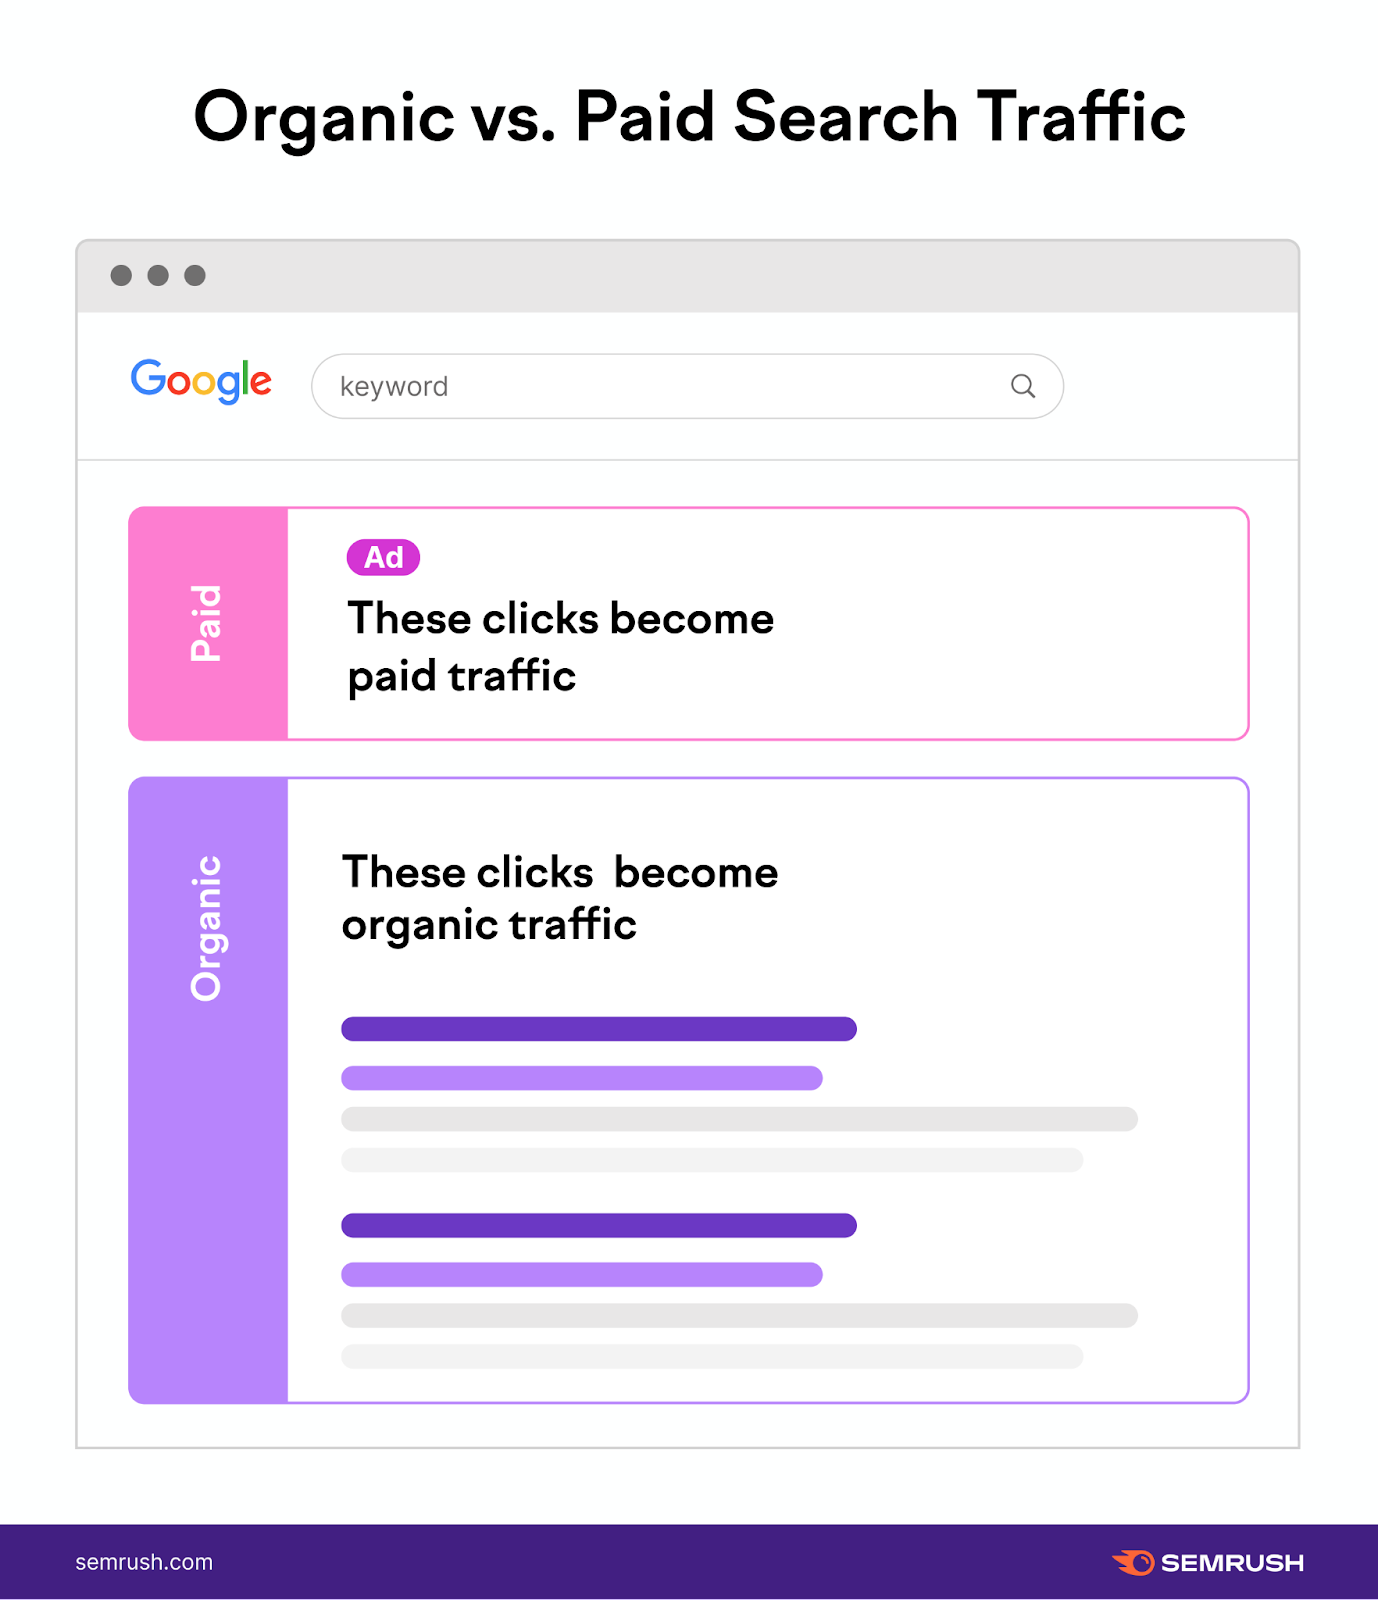 Organic vs. paid search traffic on SERP